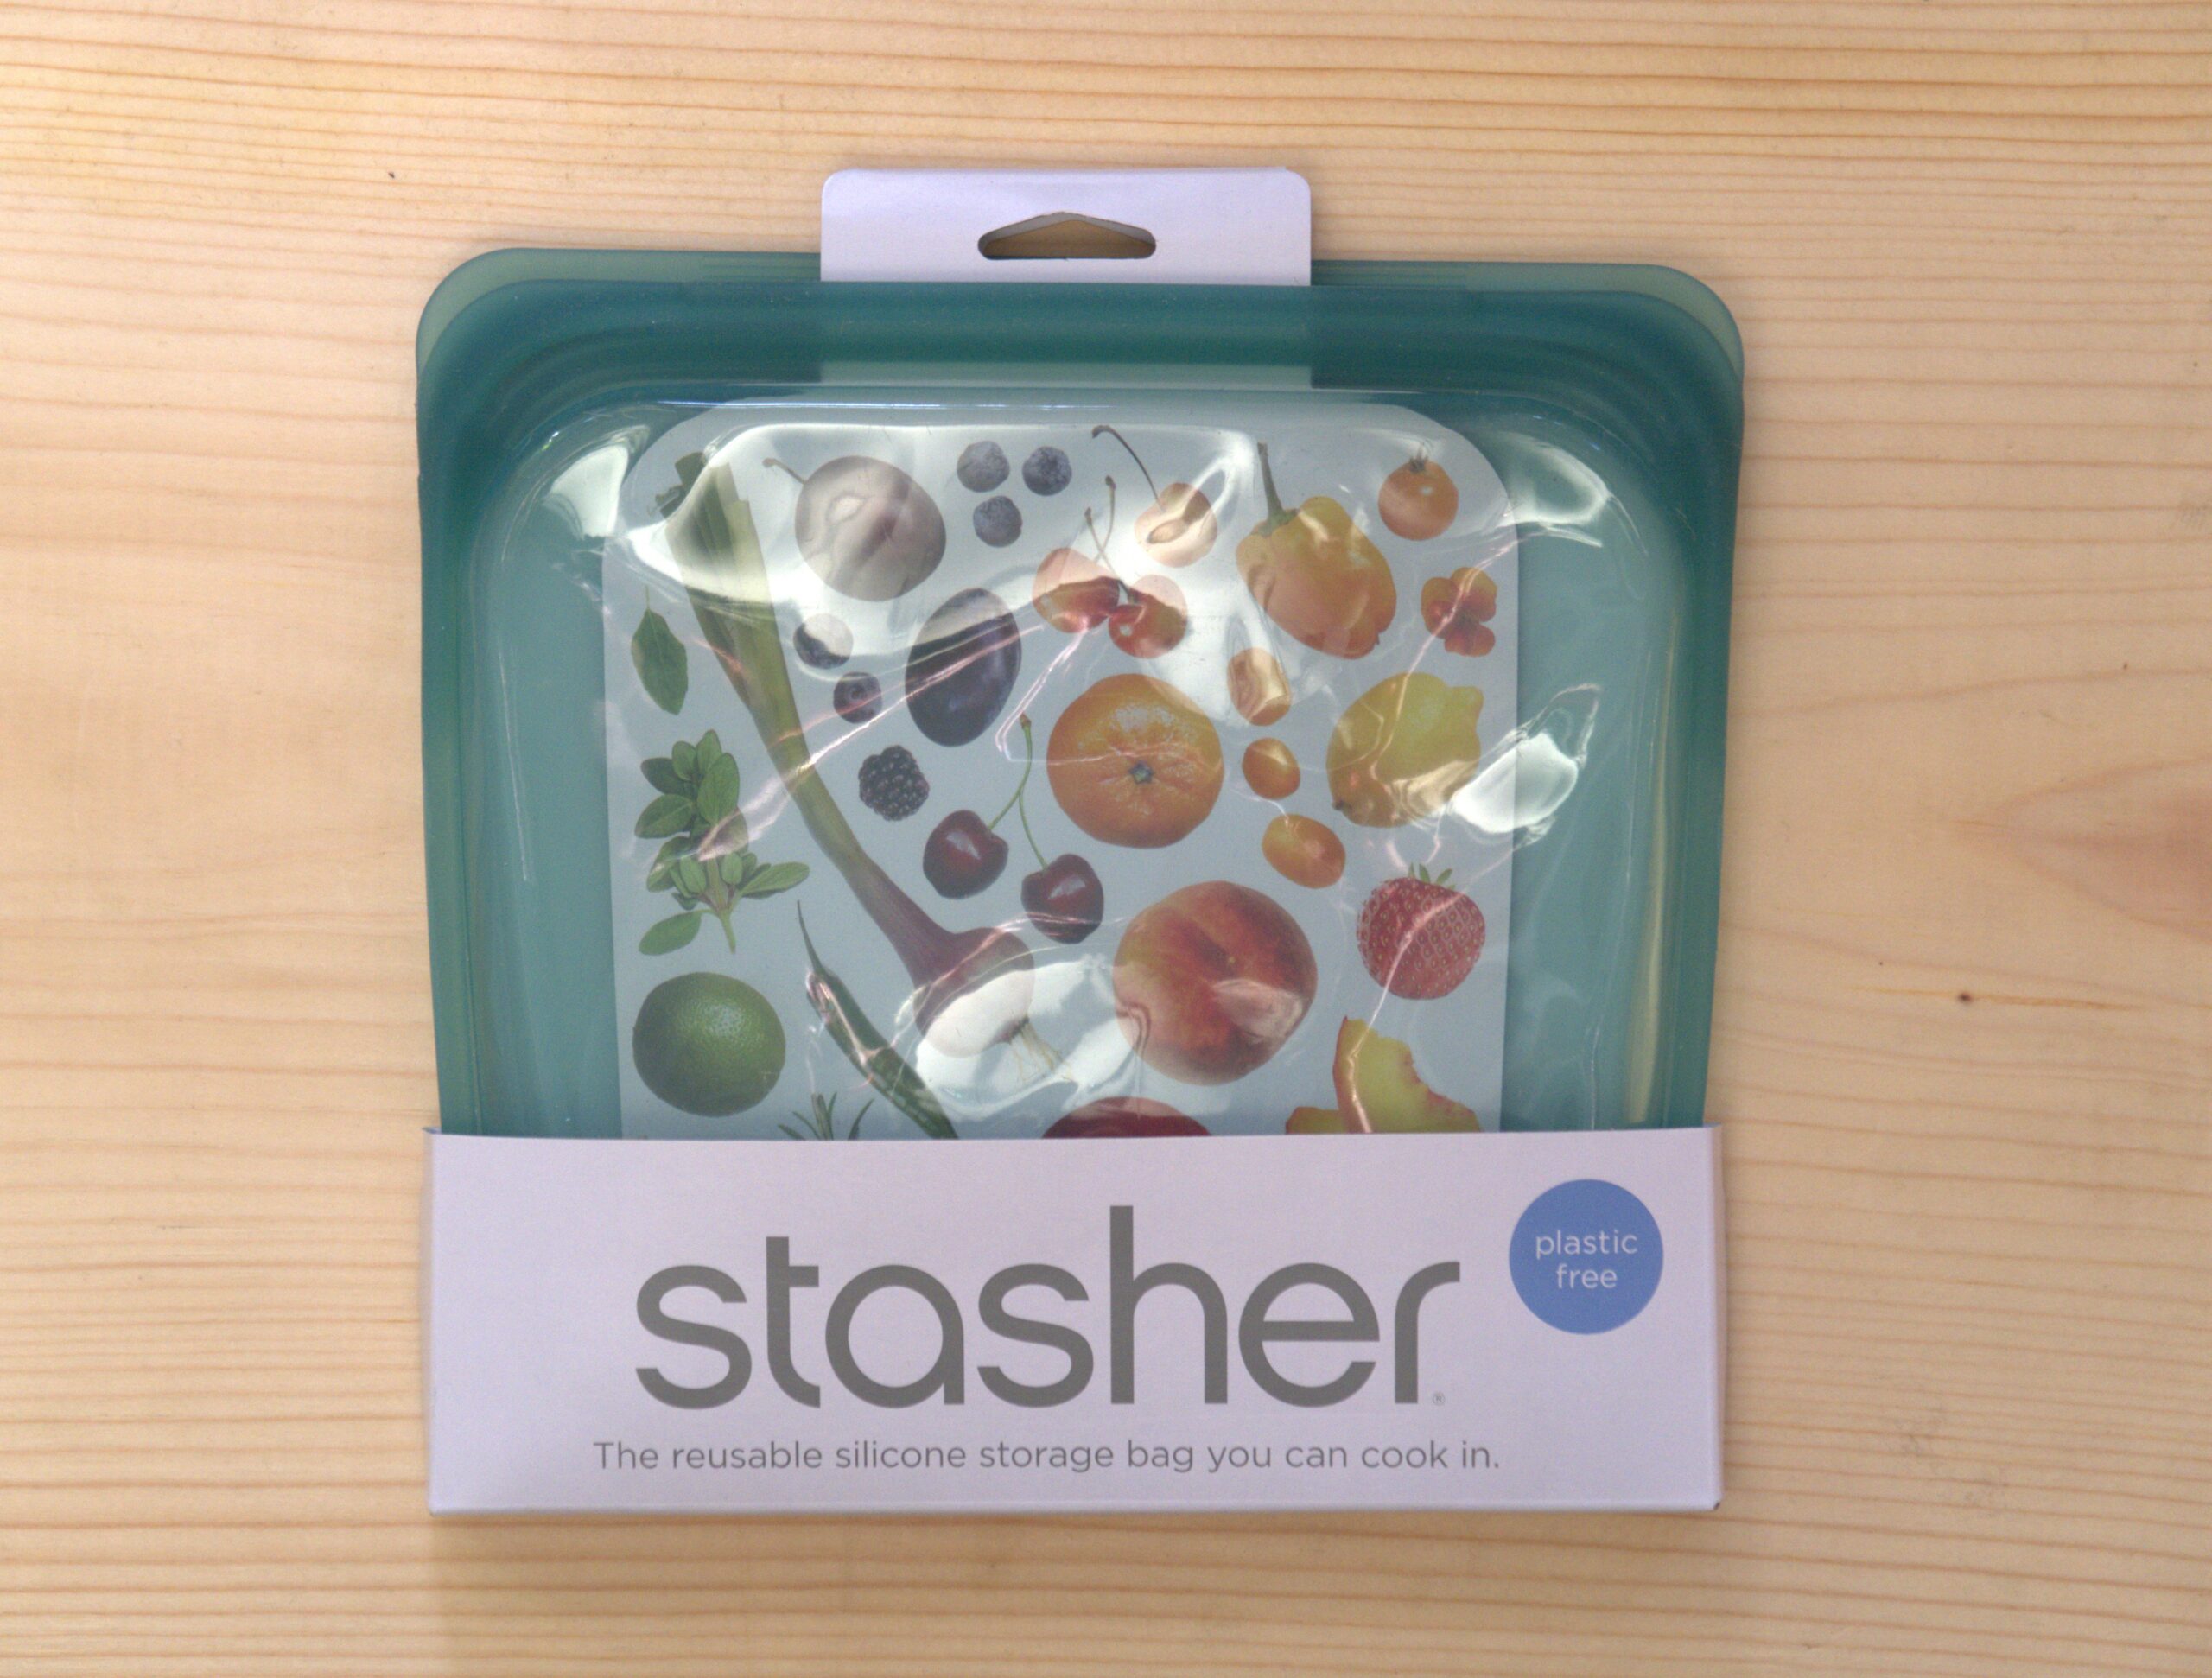 Stasher Bags - A Plastic-Free Food Storage Alternative - The Source Zero